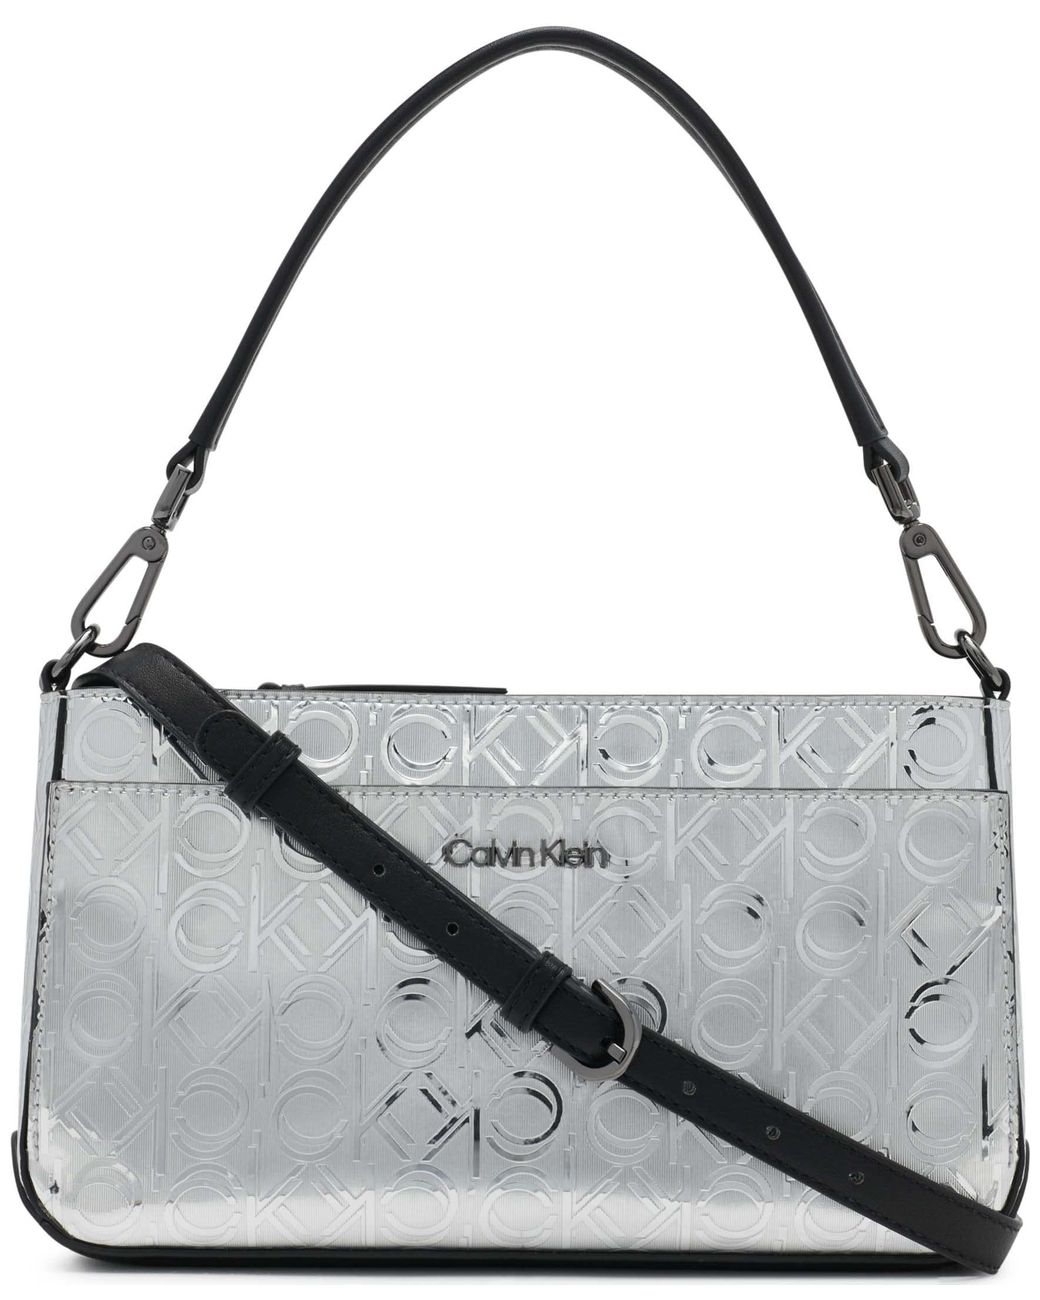 Calvin Klein Lucy Triple Compartment Shoulder Bag in Metallic